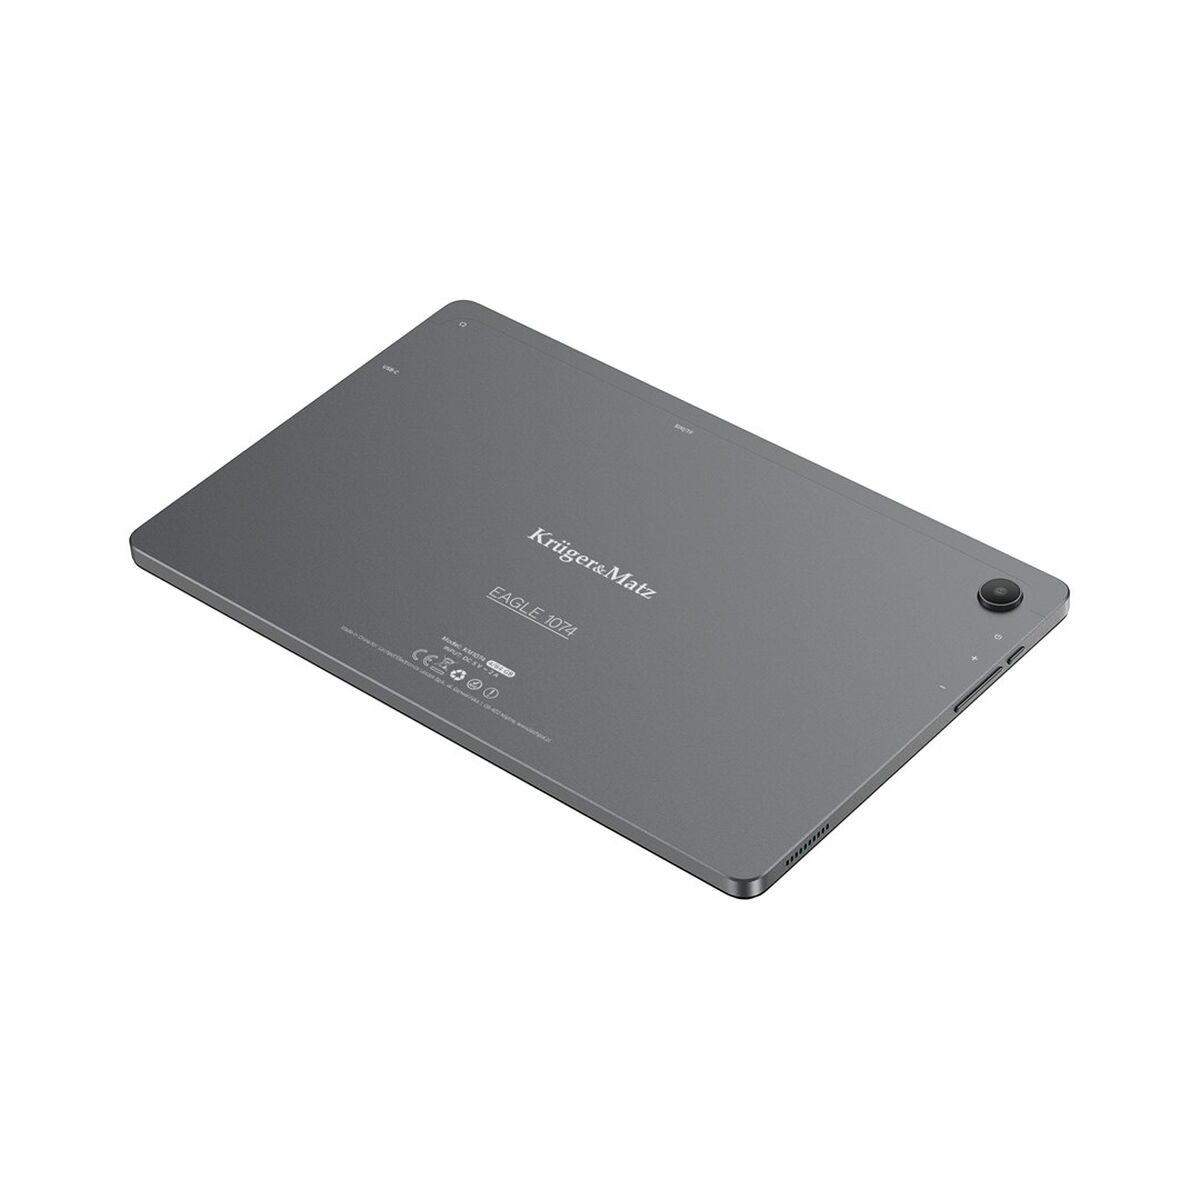 Tablet Kruger & Matz KM1074 10,4" Unisoc Tiger T618 4 GB RAM 64 GB Grafite